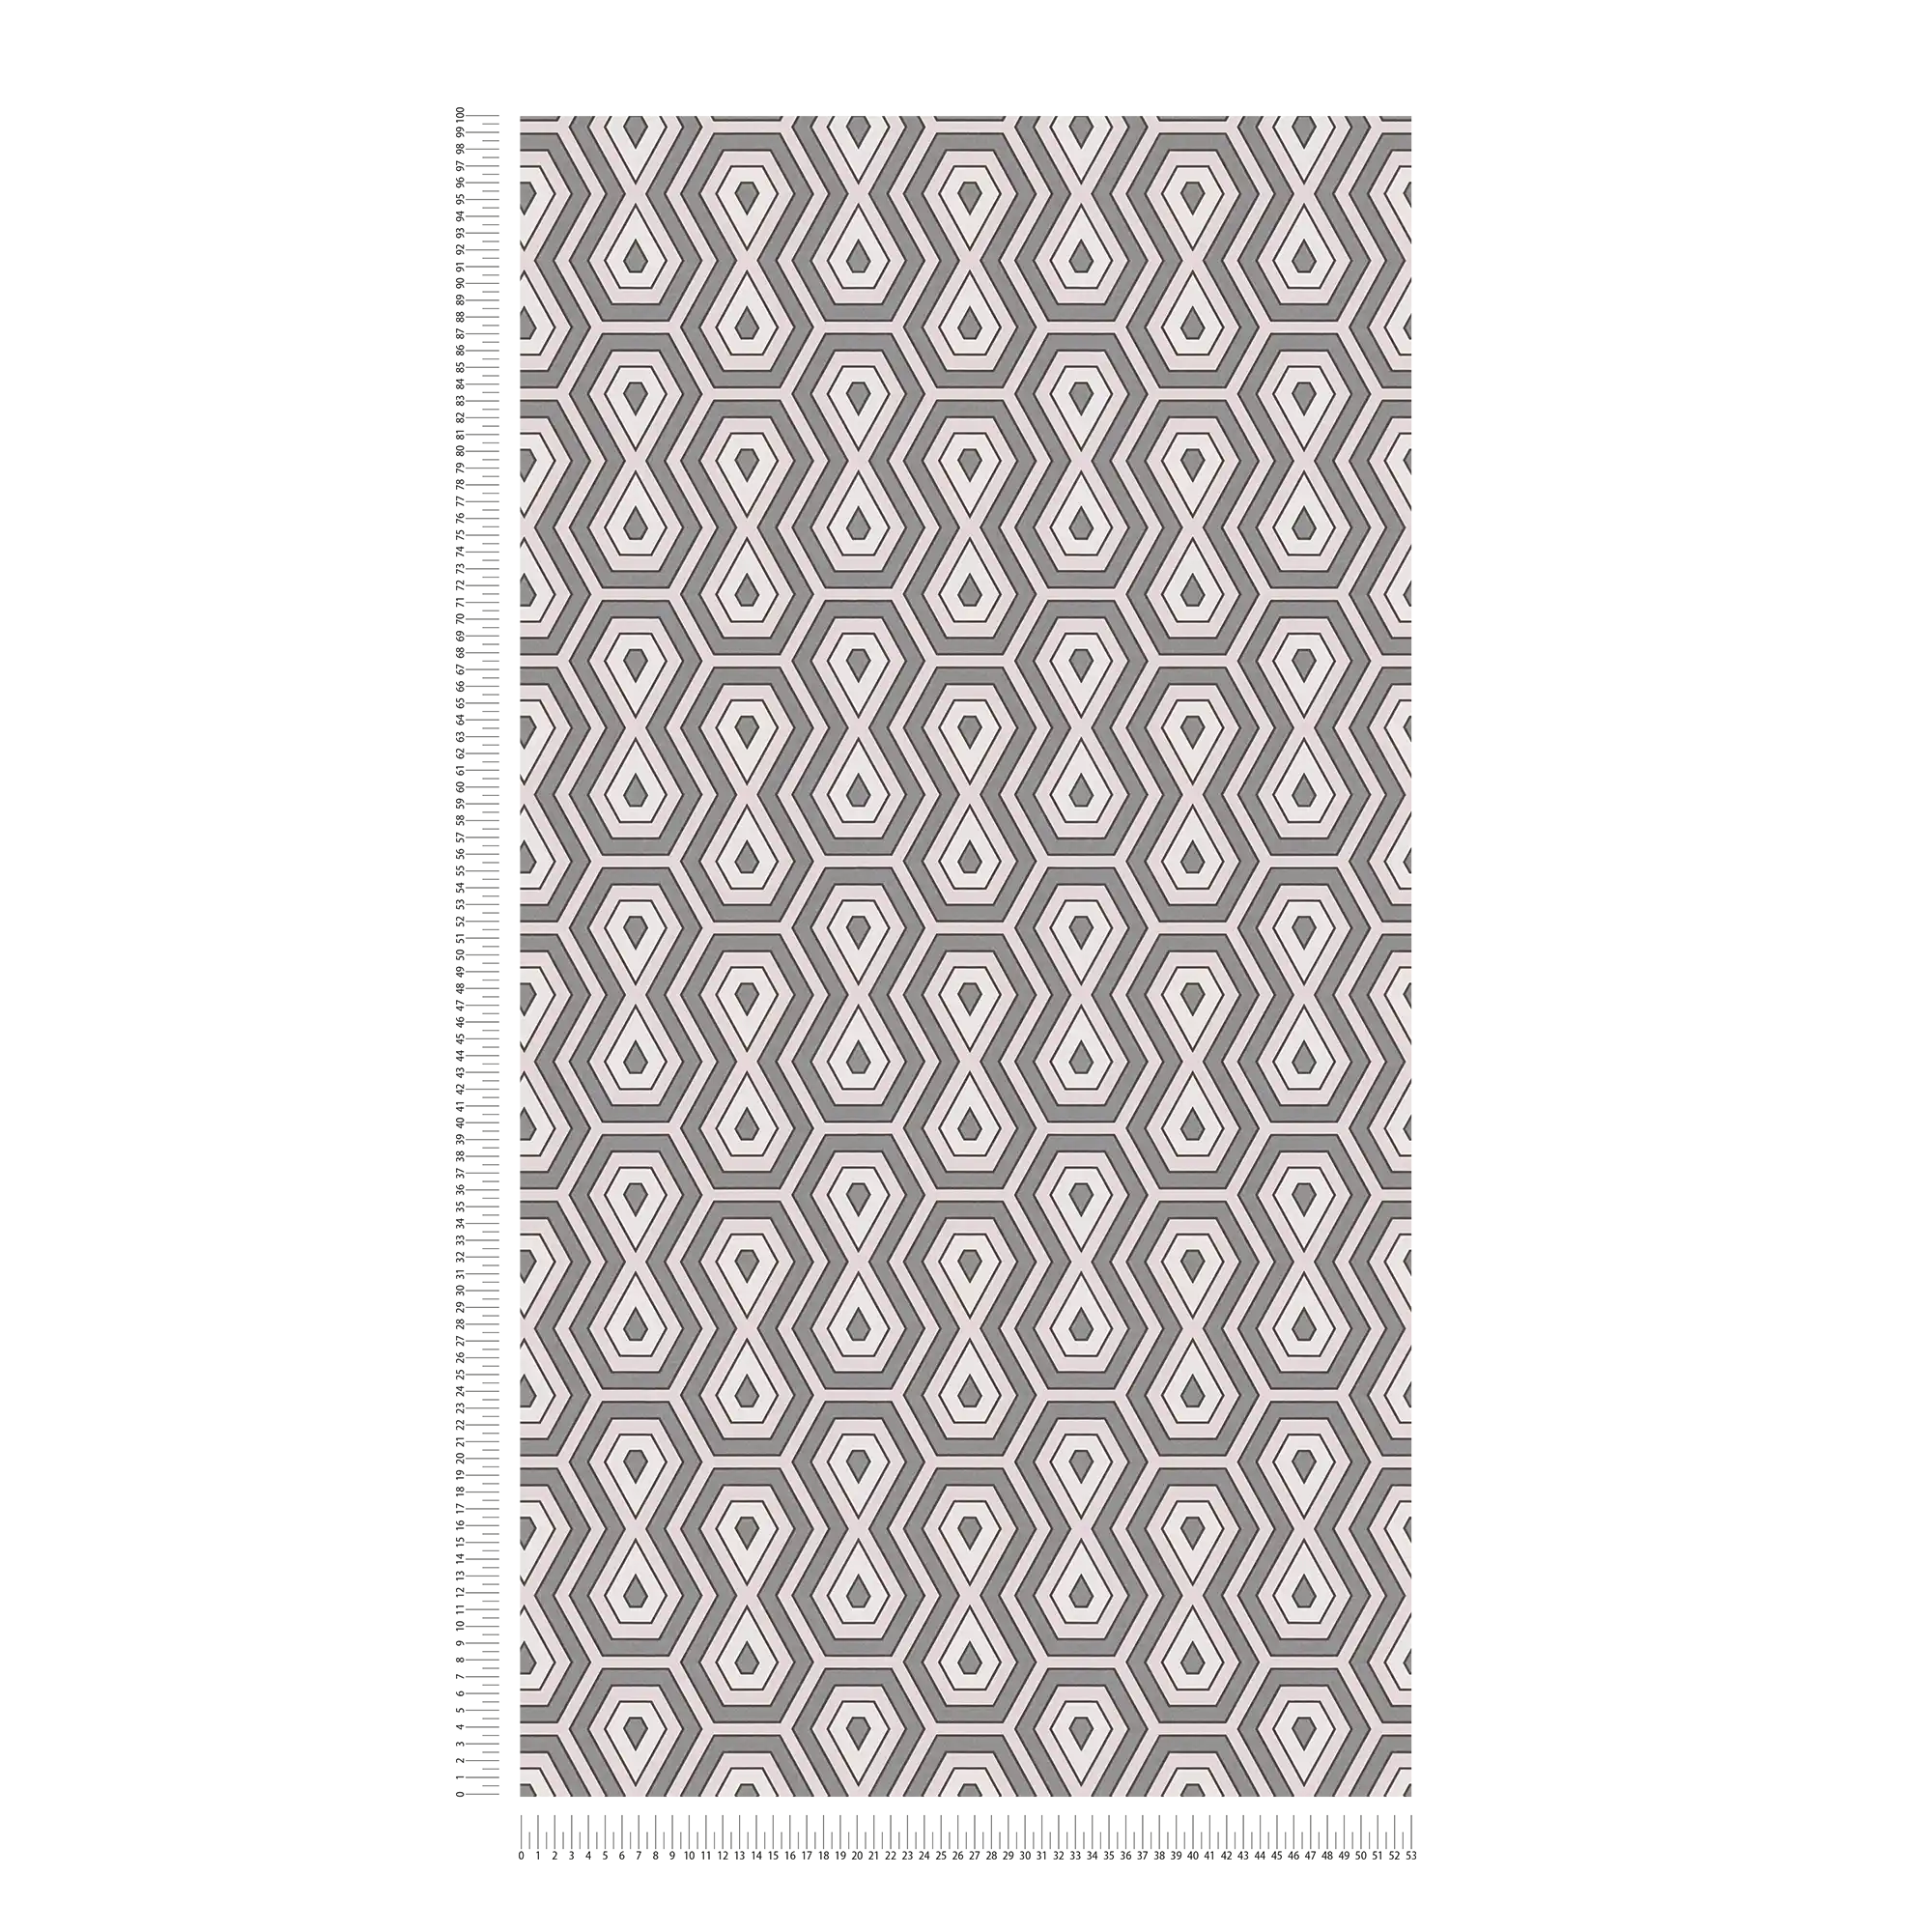             Tapete Metallic Retro Muster mit 70er Grafik Design – Rosa, Grau, Weiß
        